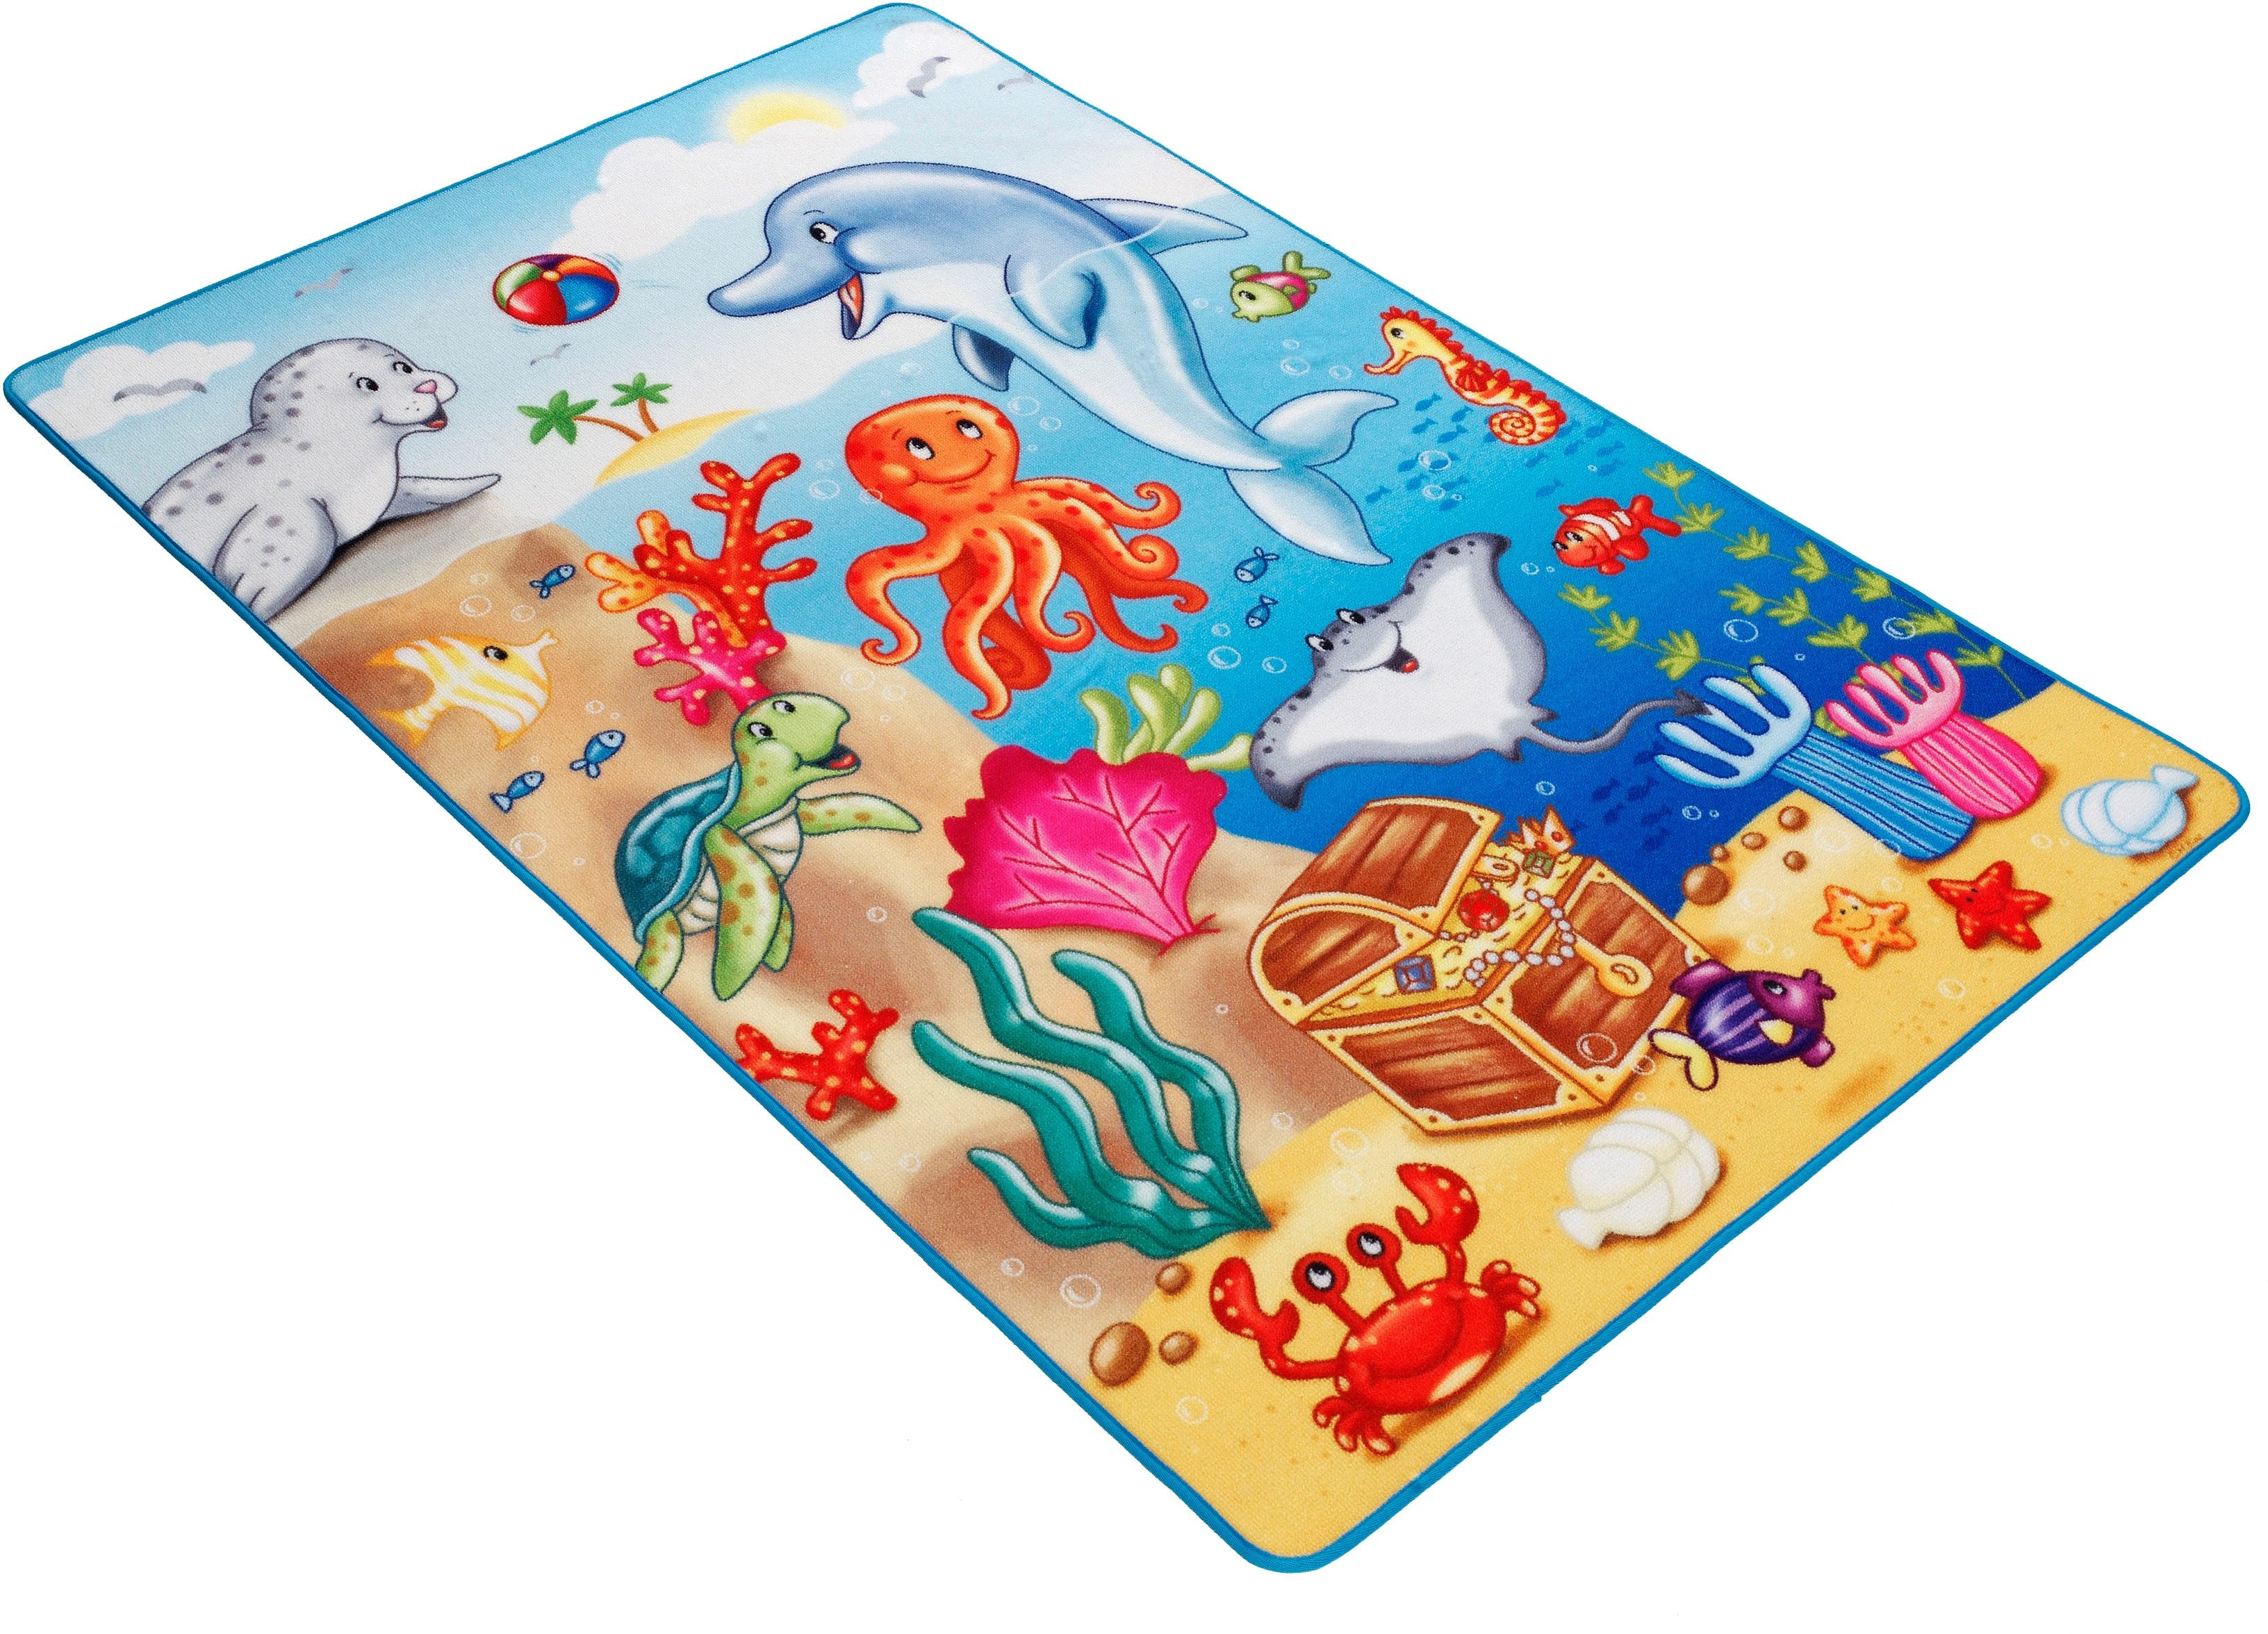 Böing Carpet Kindervloerkleed Lovely Kids LK-7 Motief dieren in de zee, kinderkamer